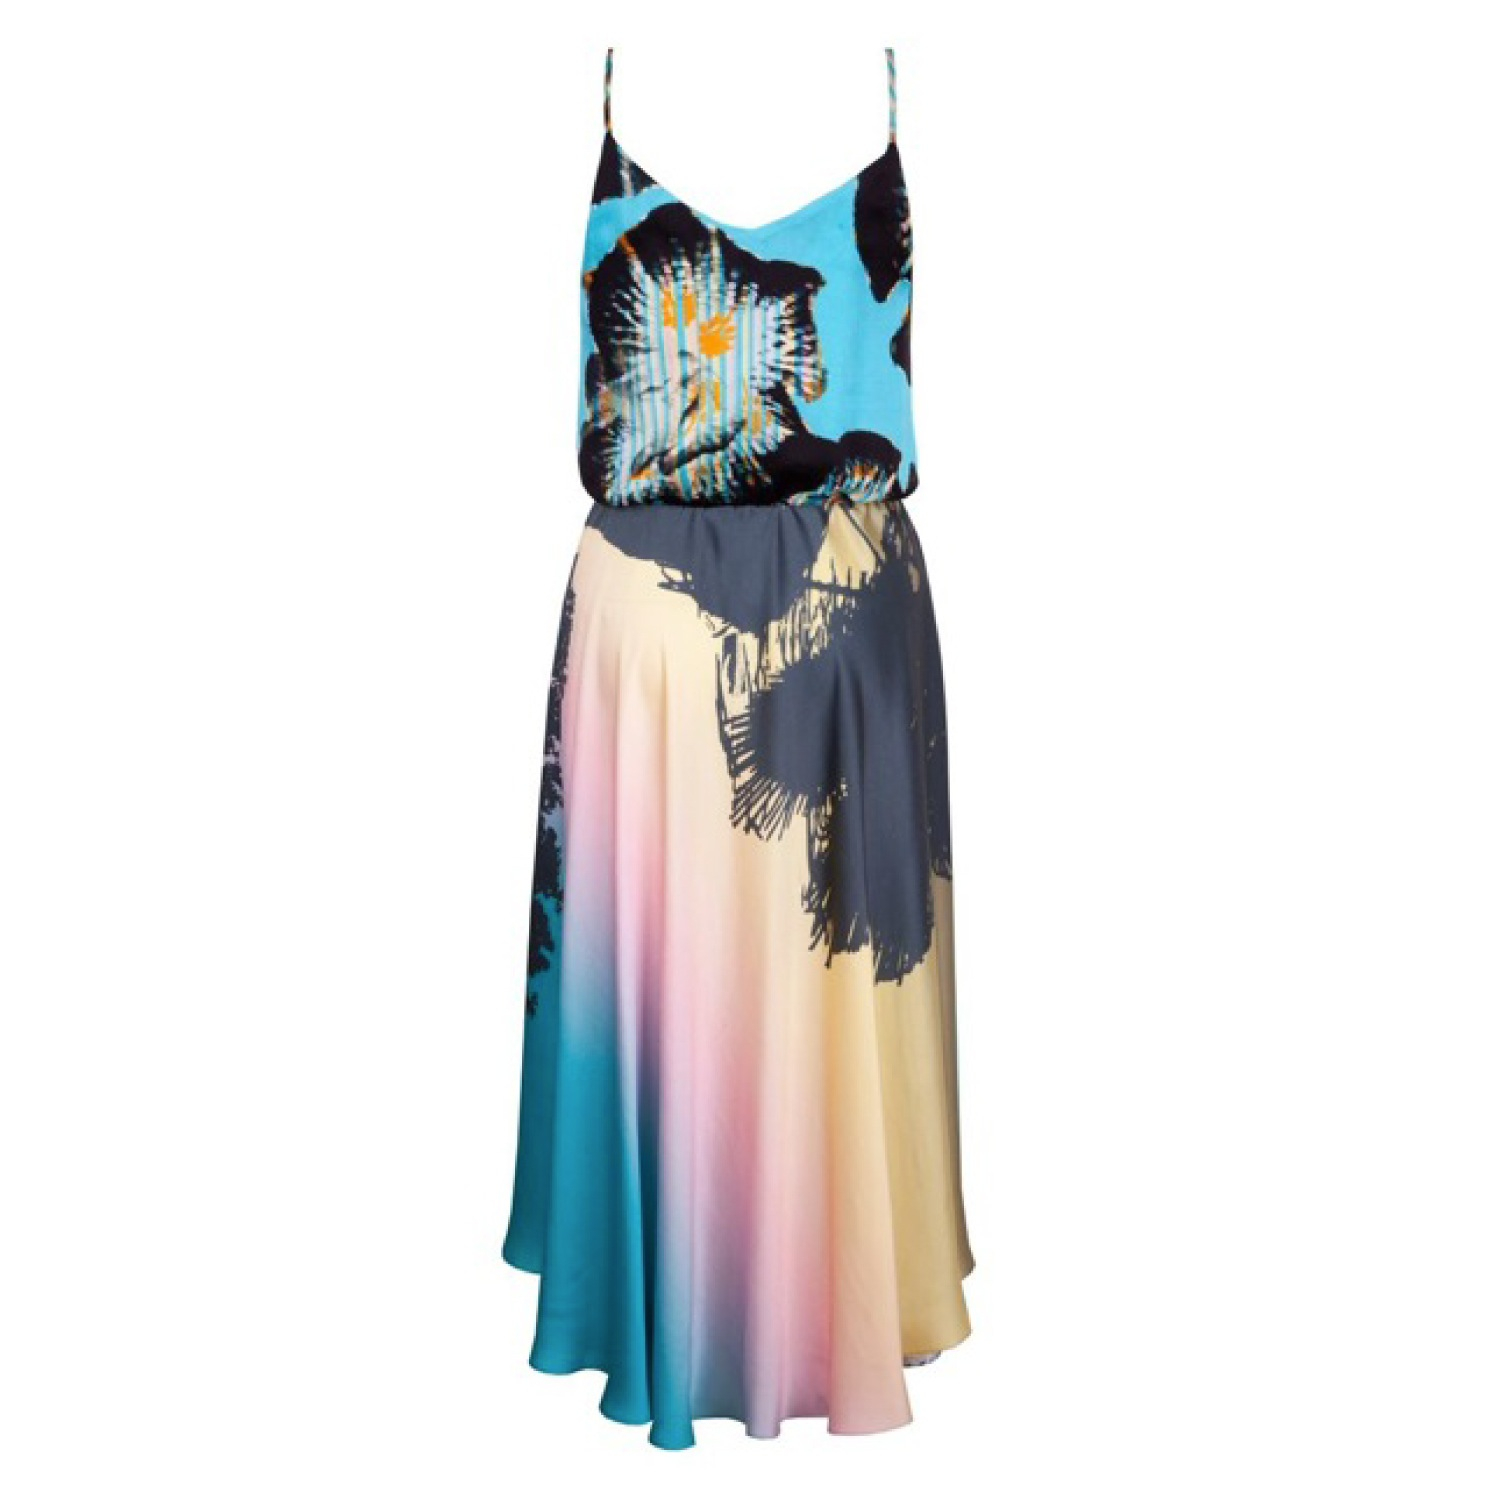 Lyst - Ellie lines Fiona Aquashine Dress